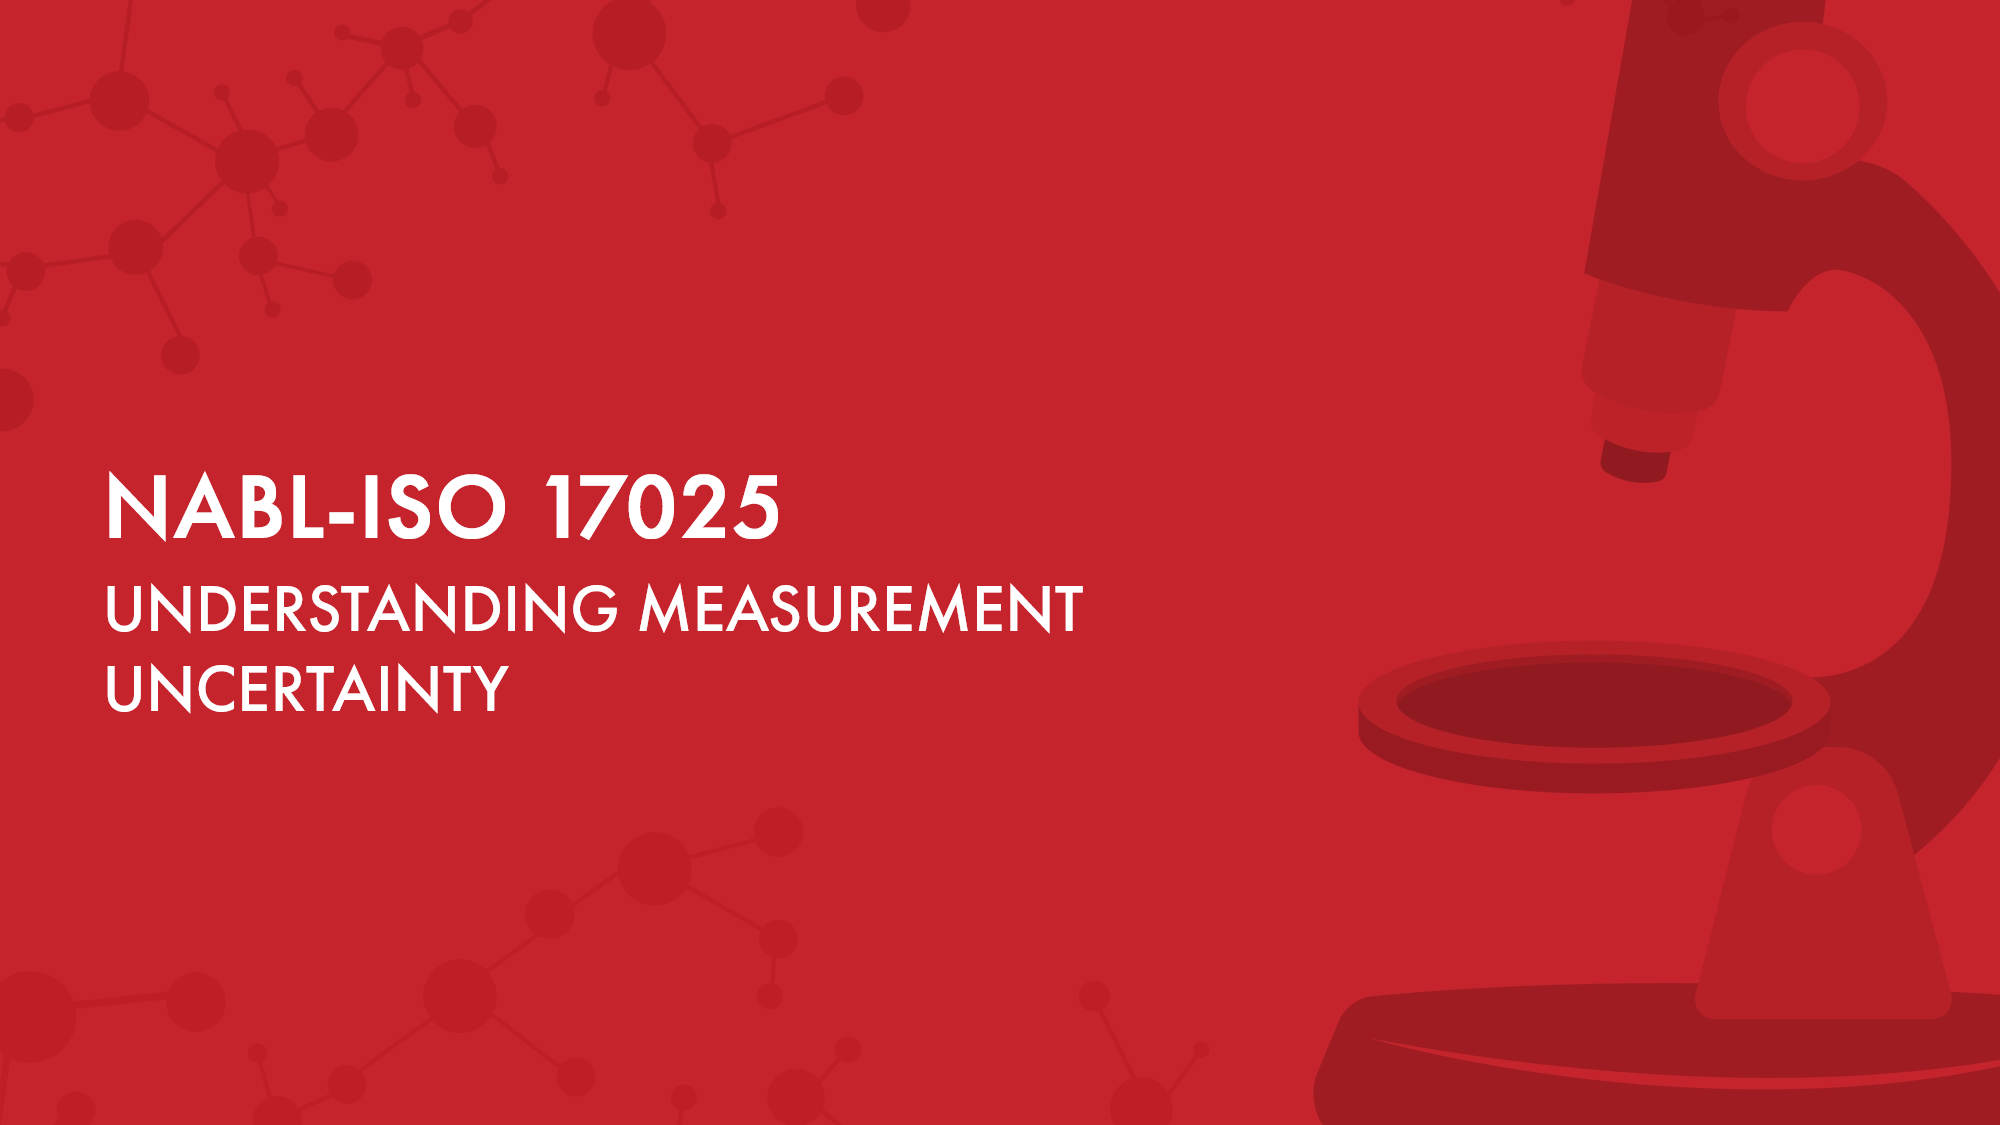 Understand Measurement Uncertainty according to NABL ISO 17025